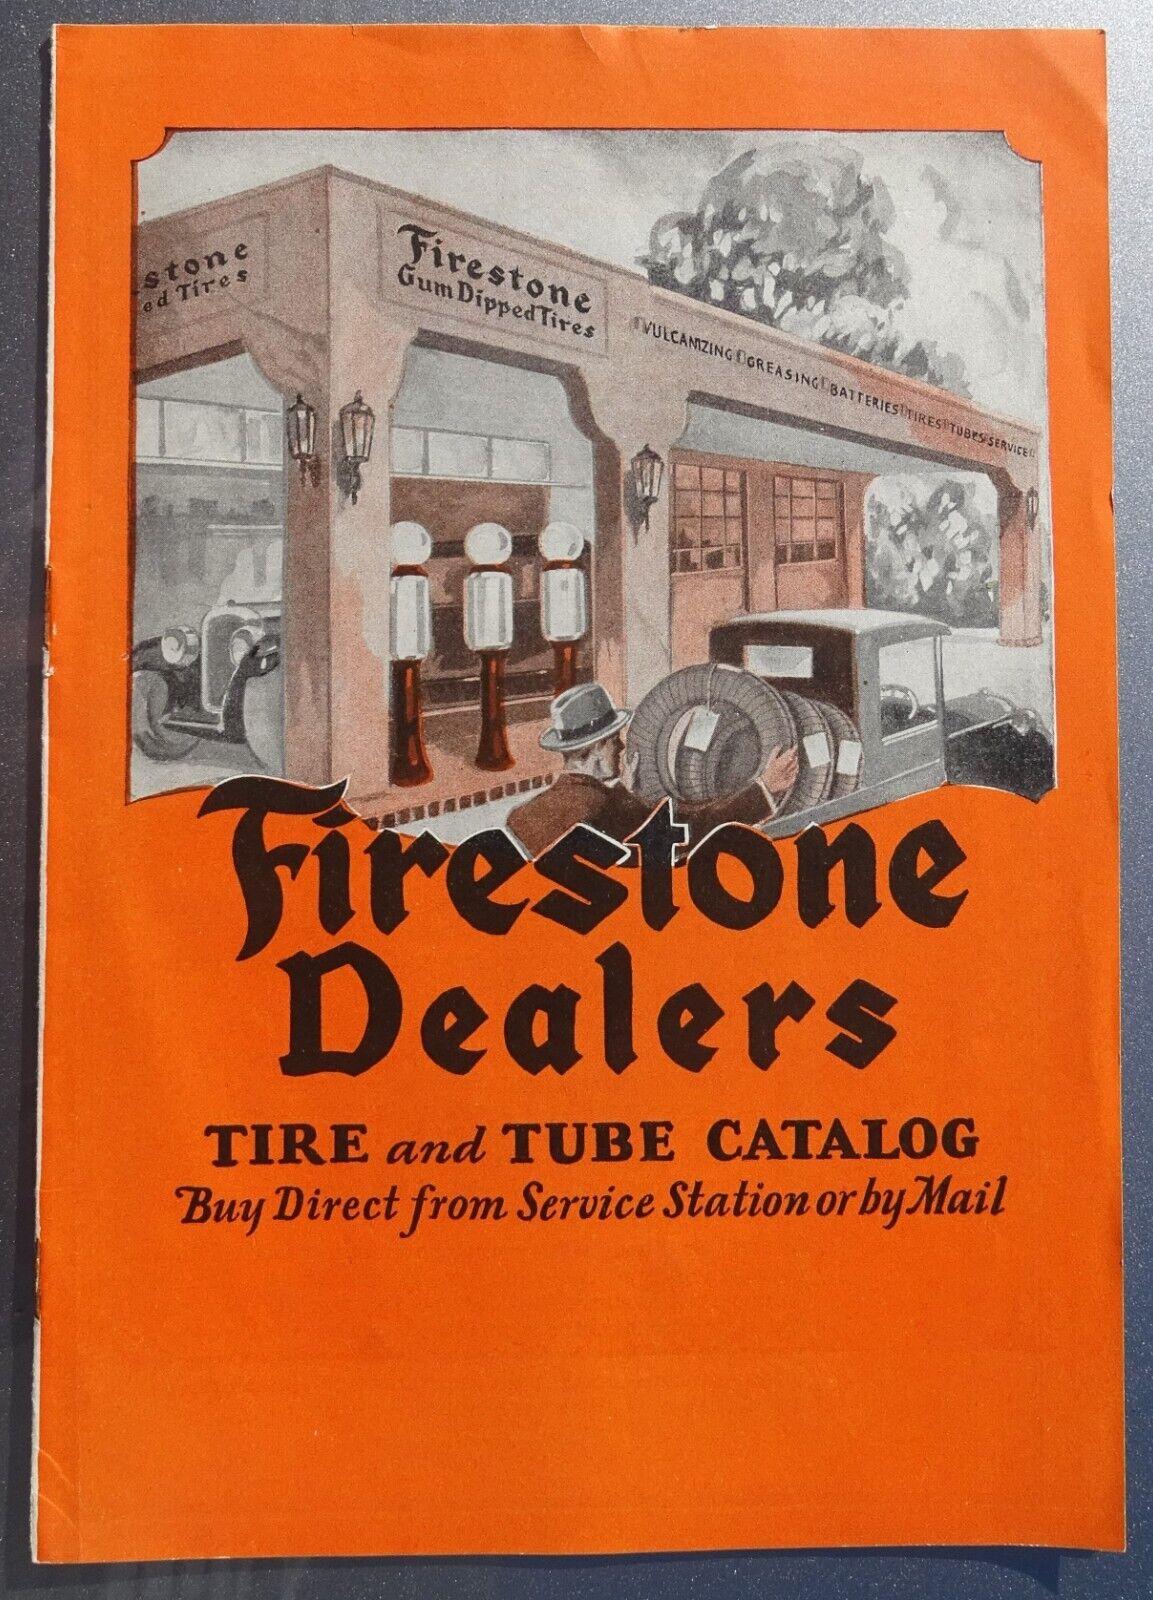 circa 1928 Firestone Dealers Tire & Tube Catalog - very nice condition